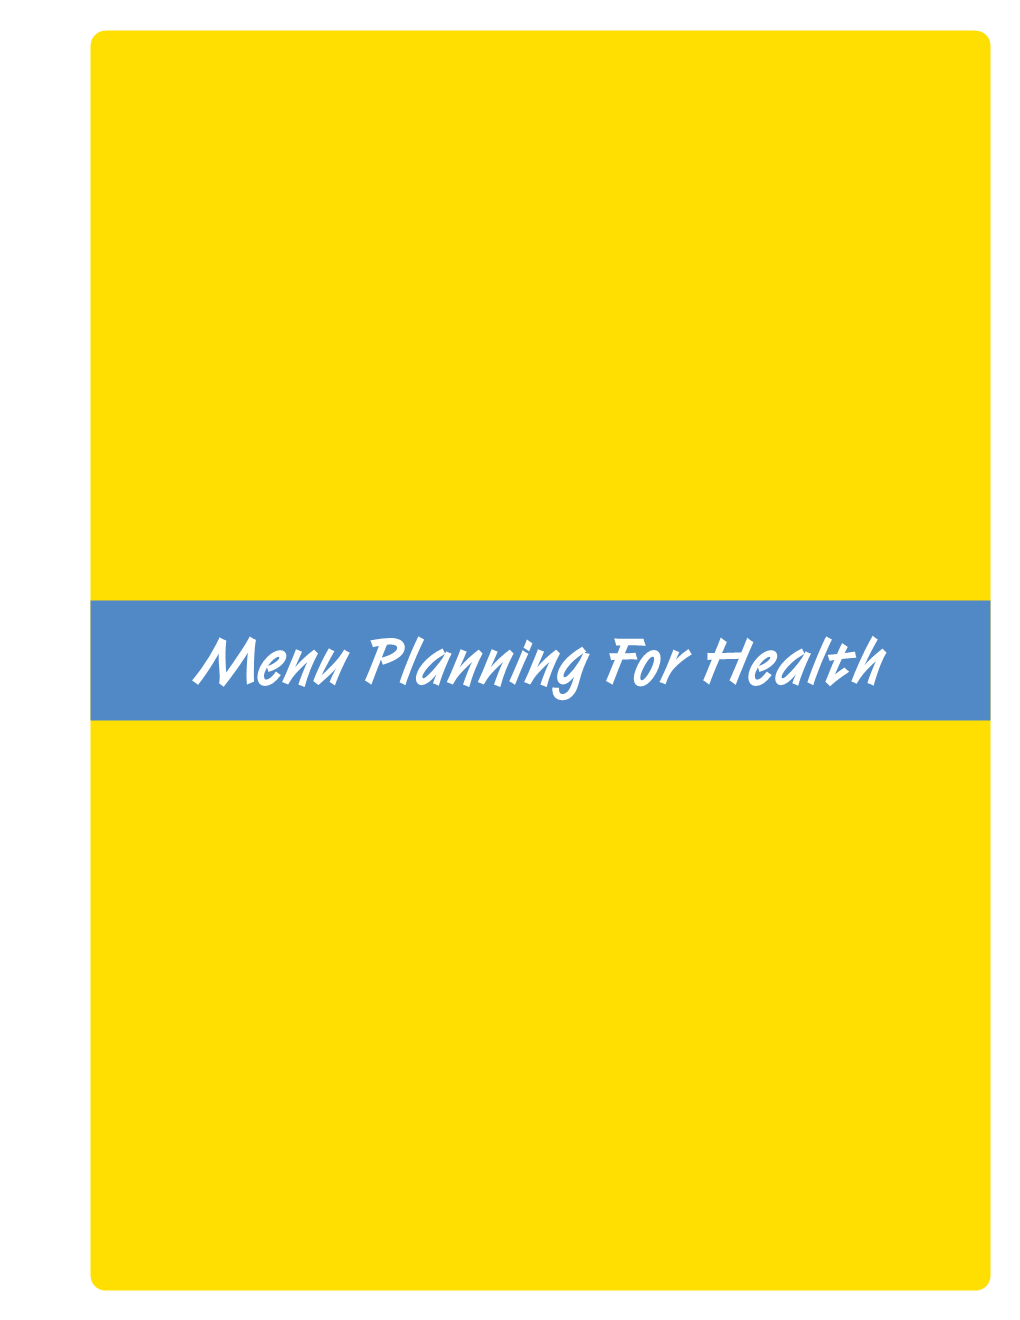 Menu Planning for Health